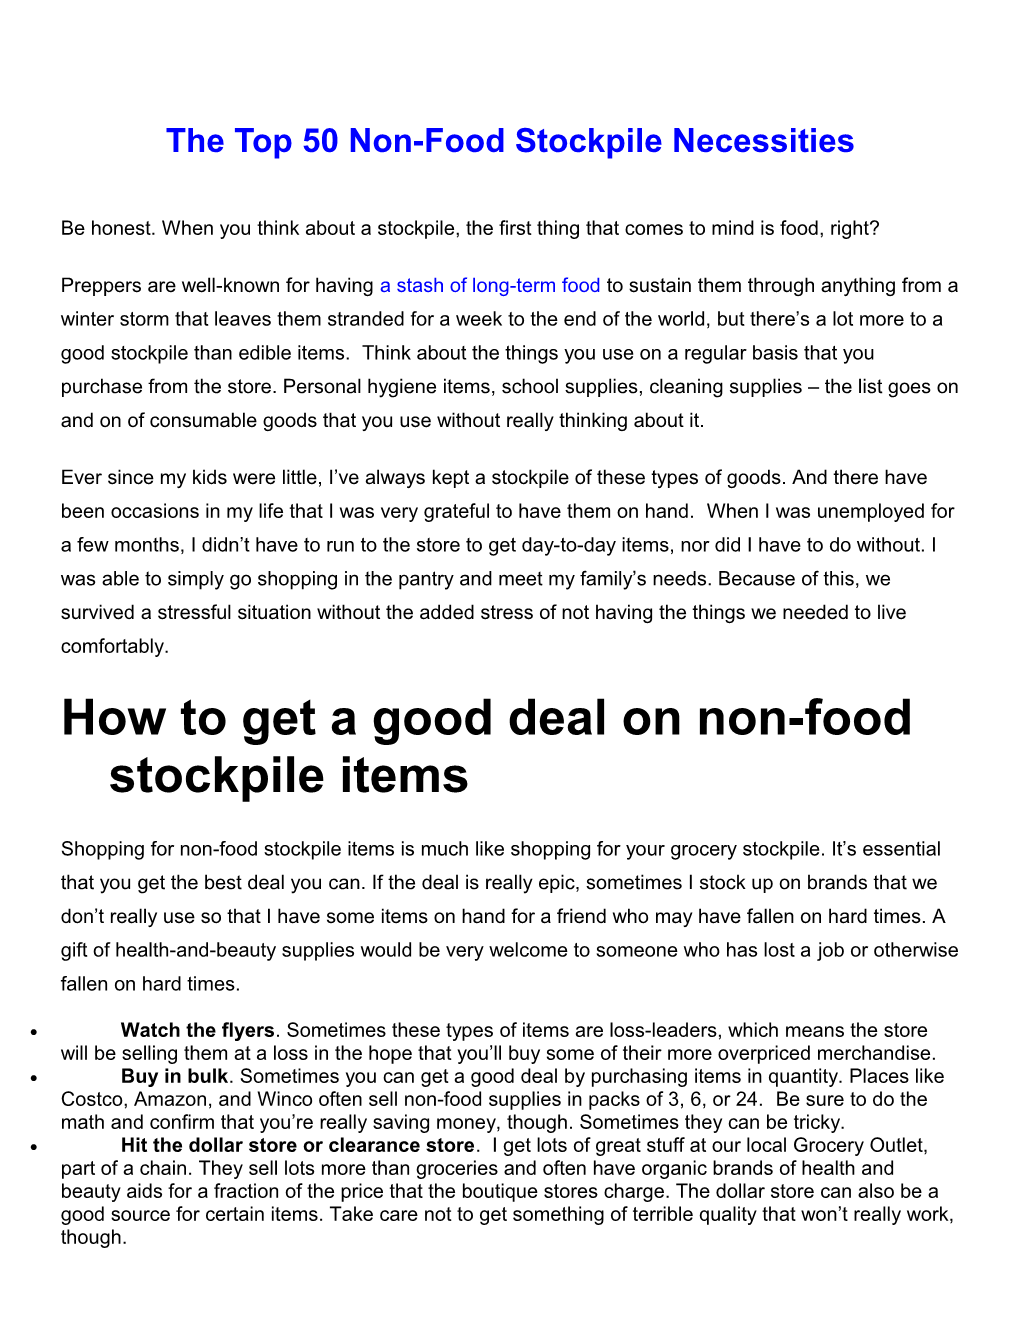 The Top 50 Non-Food Stockpile Necessities